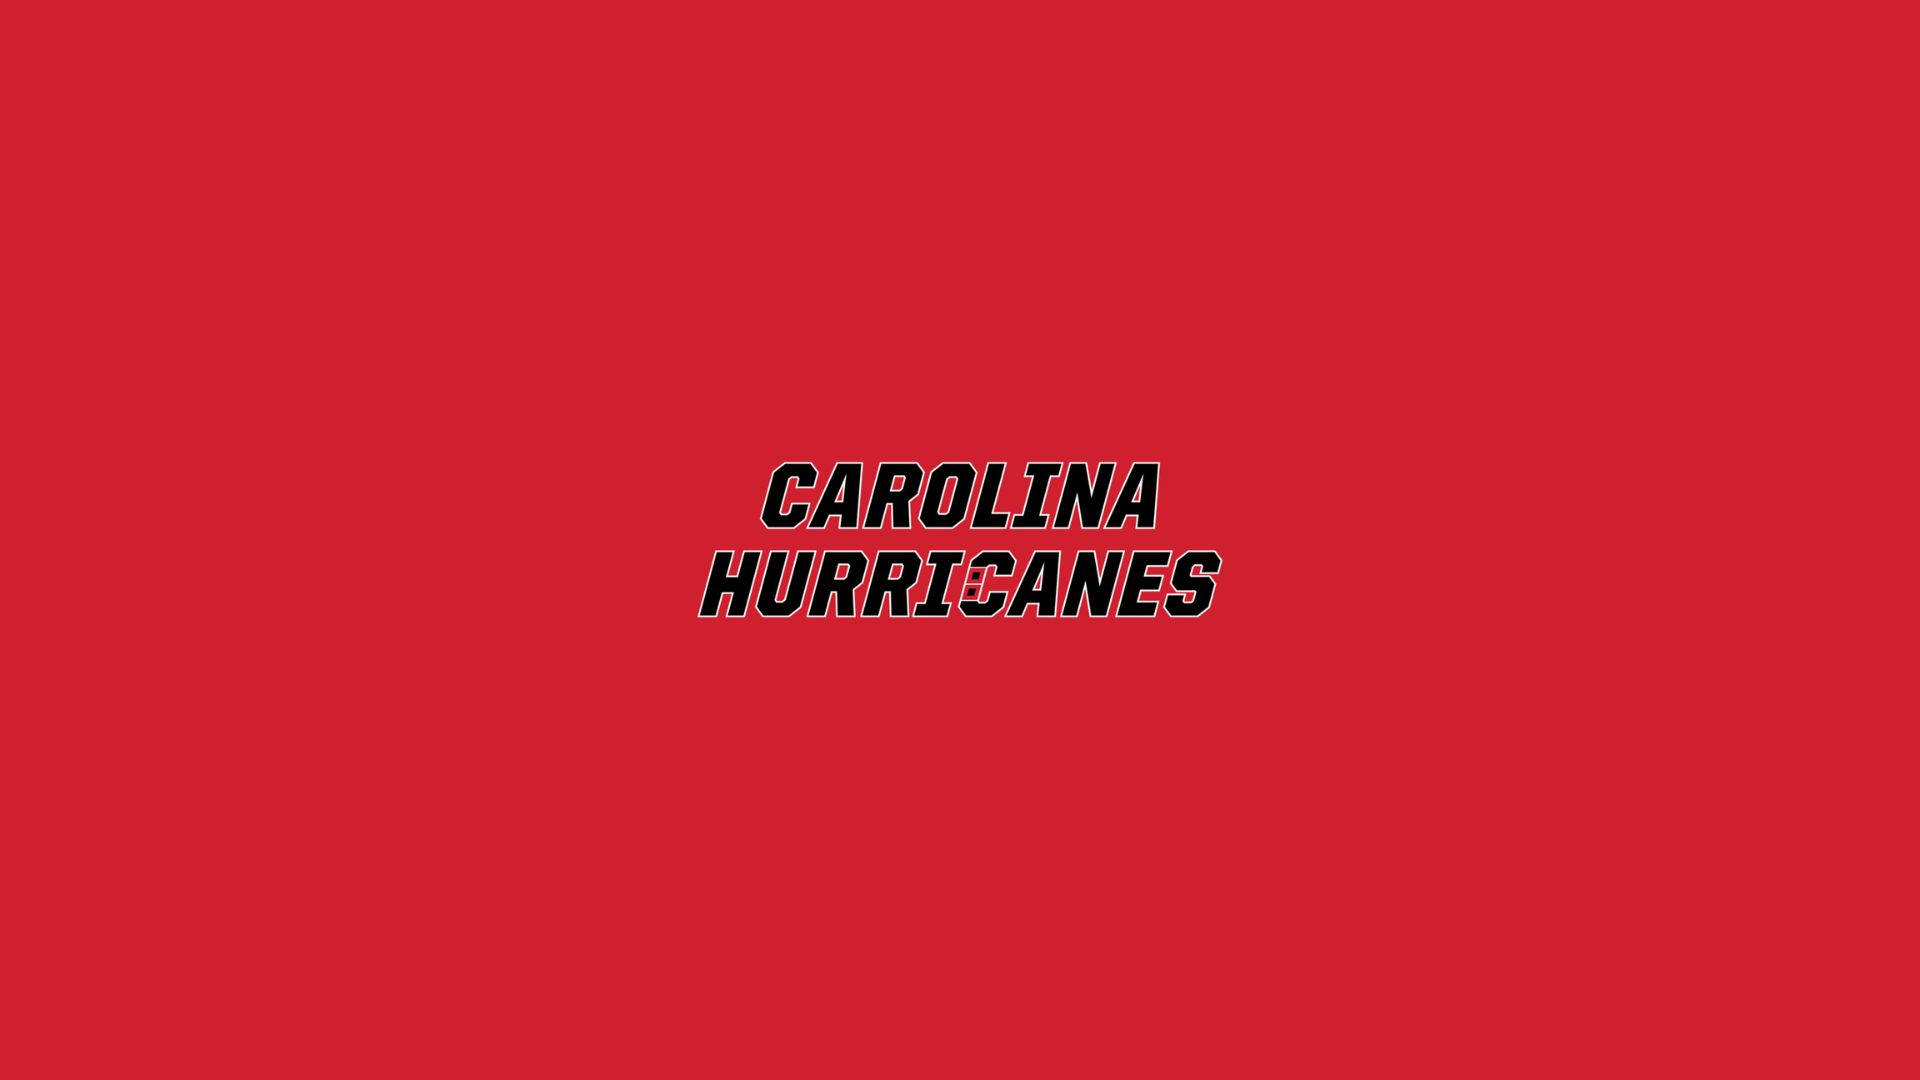 Carolina Hurricanes On Red Background